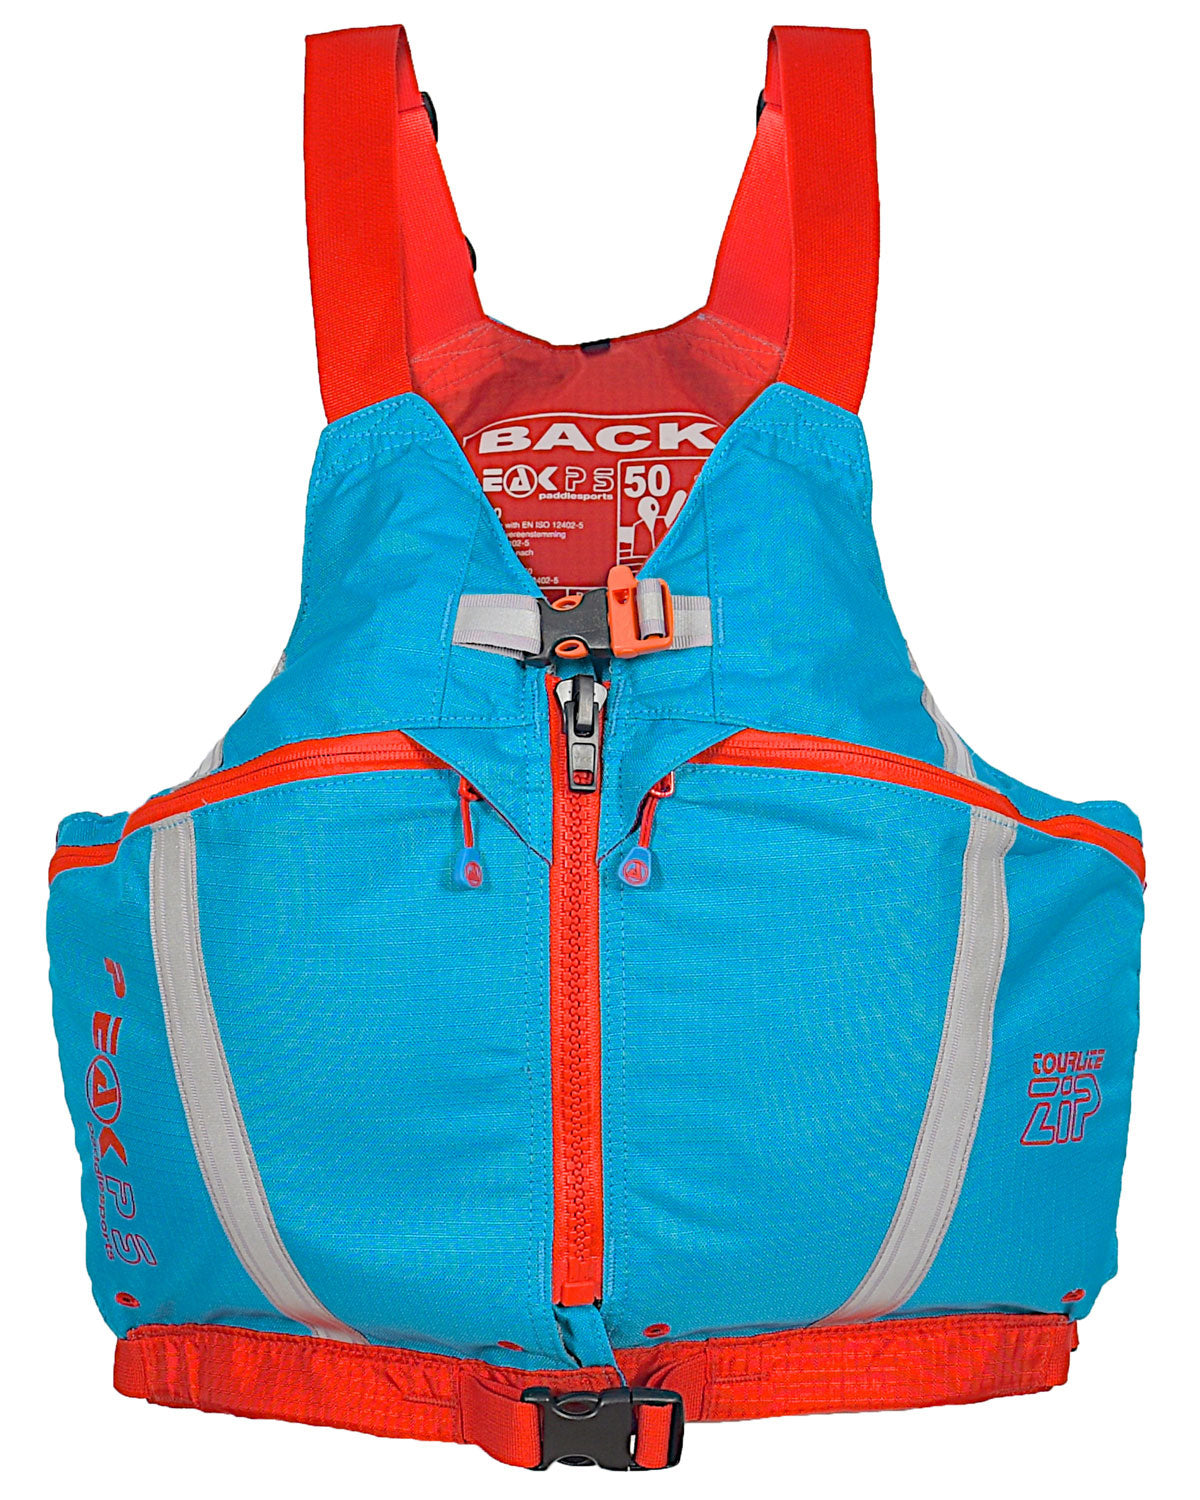 Peak Paddlesports' Tourlite Zip shown in blue with red zips